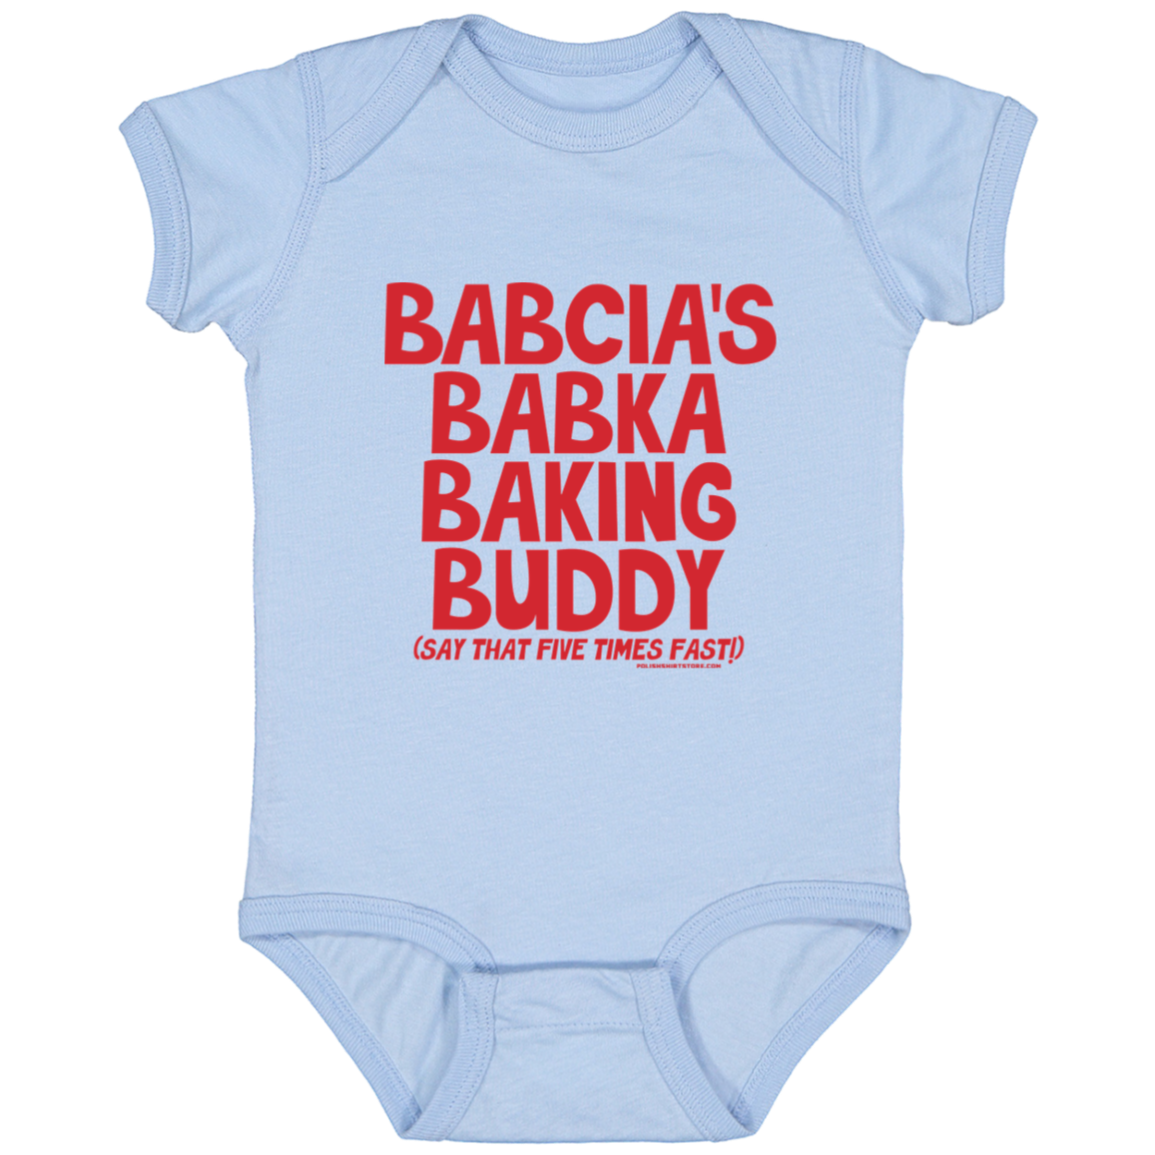 Babcia's Babka Baking Buddy Infant Bodysuit Baby CustomCat Light Blue Newborn 